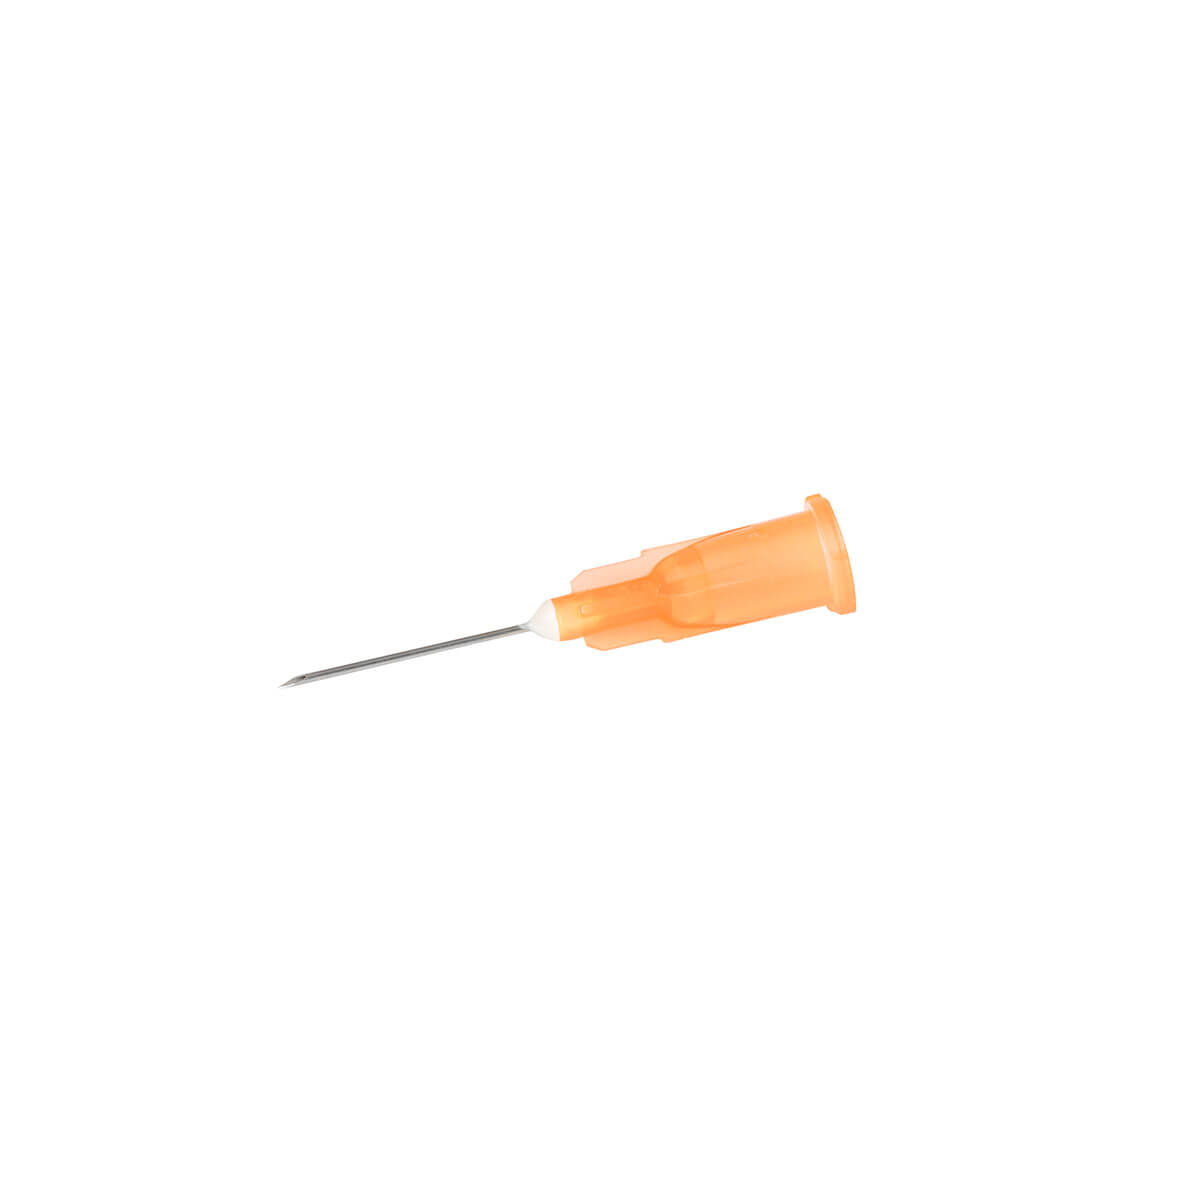 Neopoint Needle Orange 25G 16MM